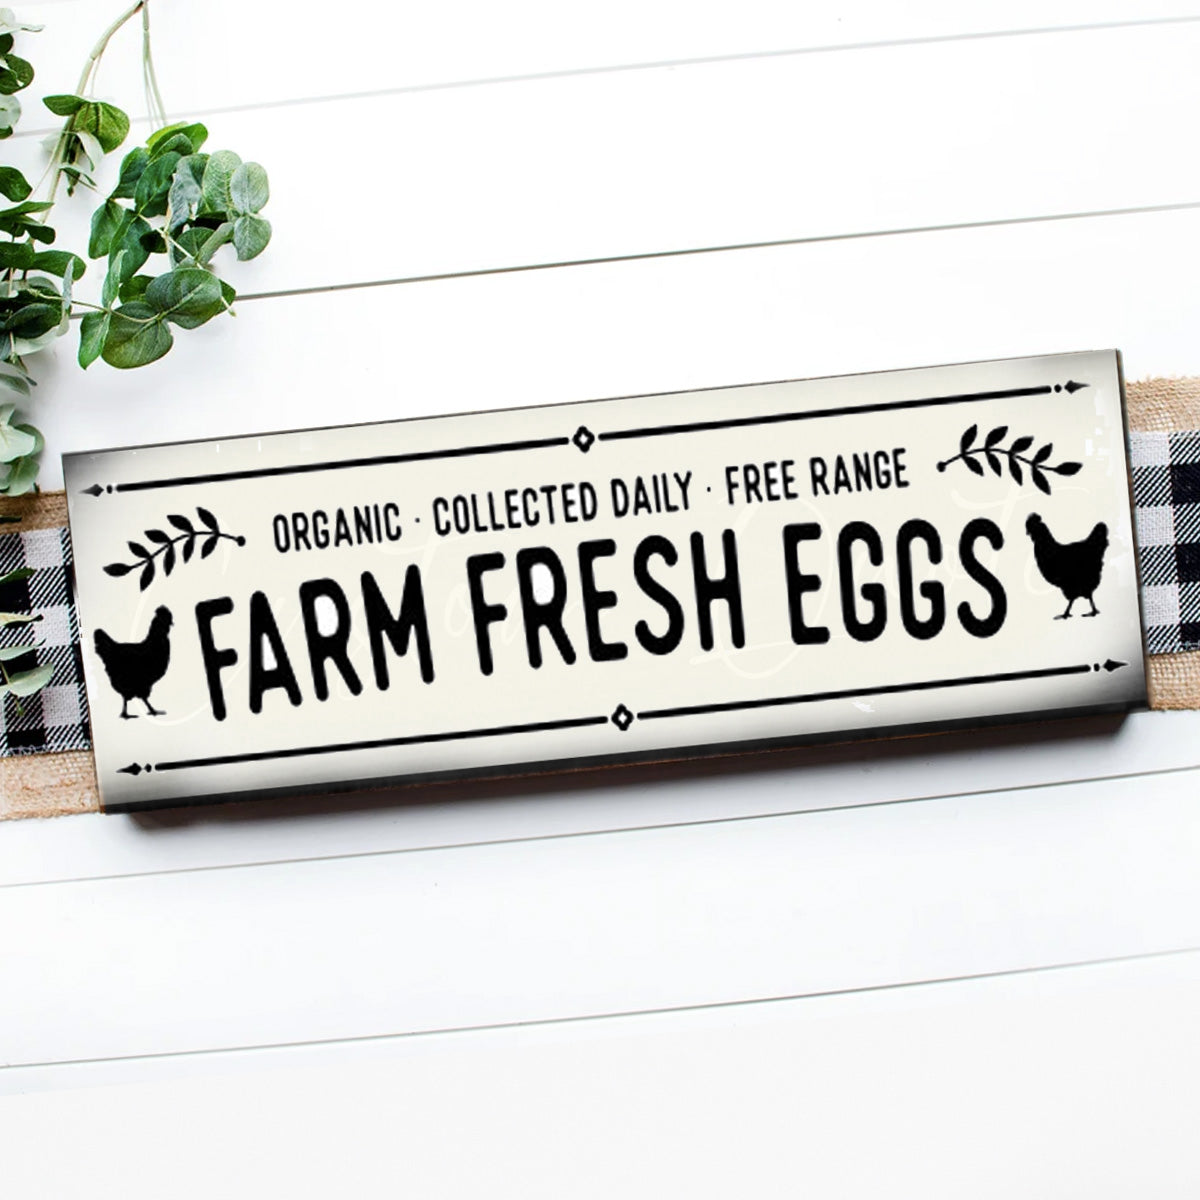 FARM FRESH EGGS -Fresh Kenny's May 29th 6:30 PM